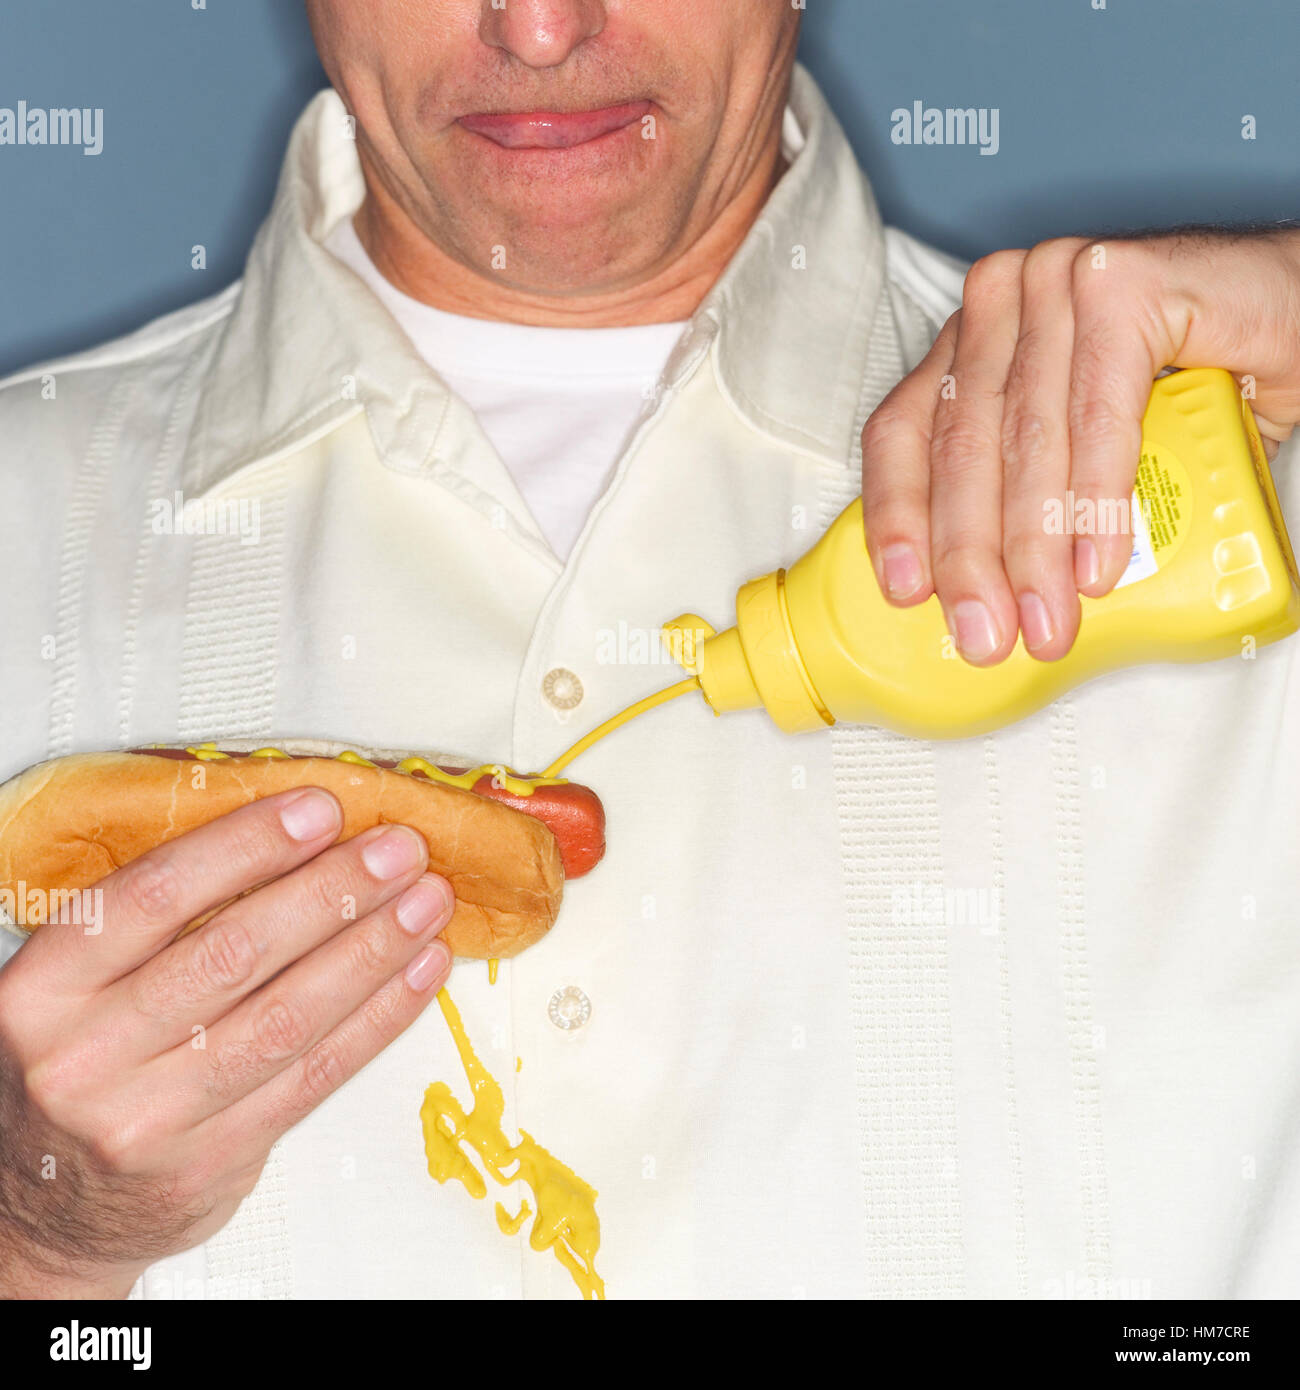 Mature man holding hotdog and accidentally spilling mustard on shirt Stock Photo